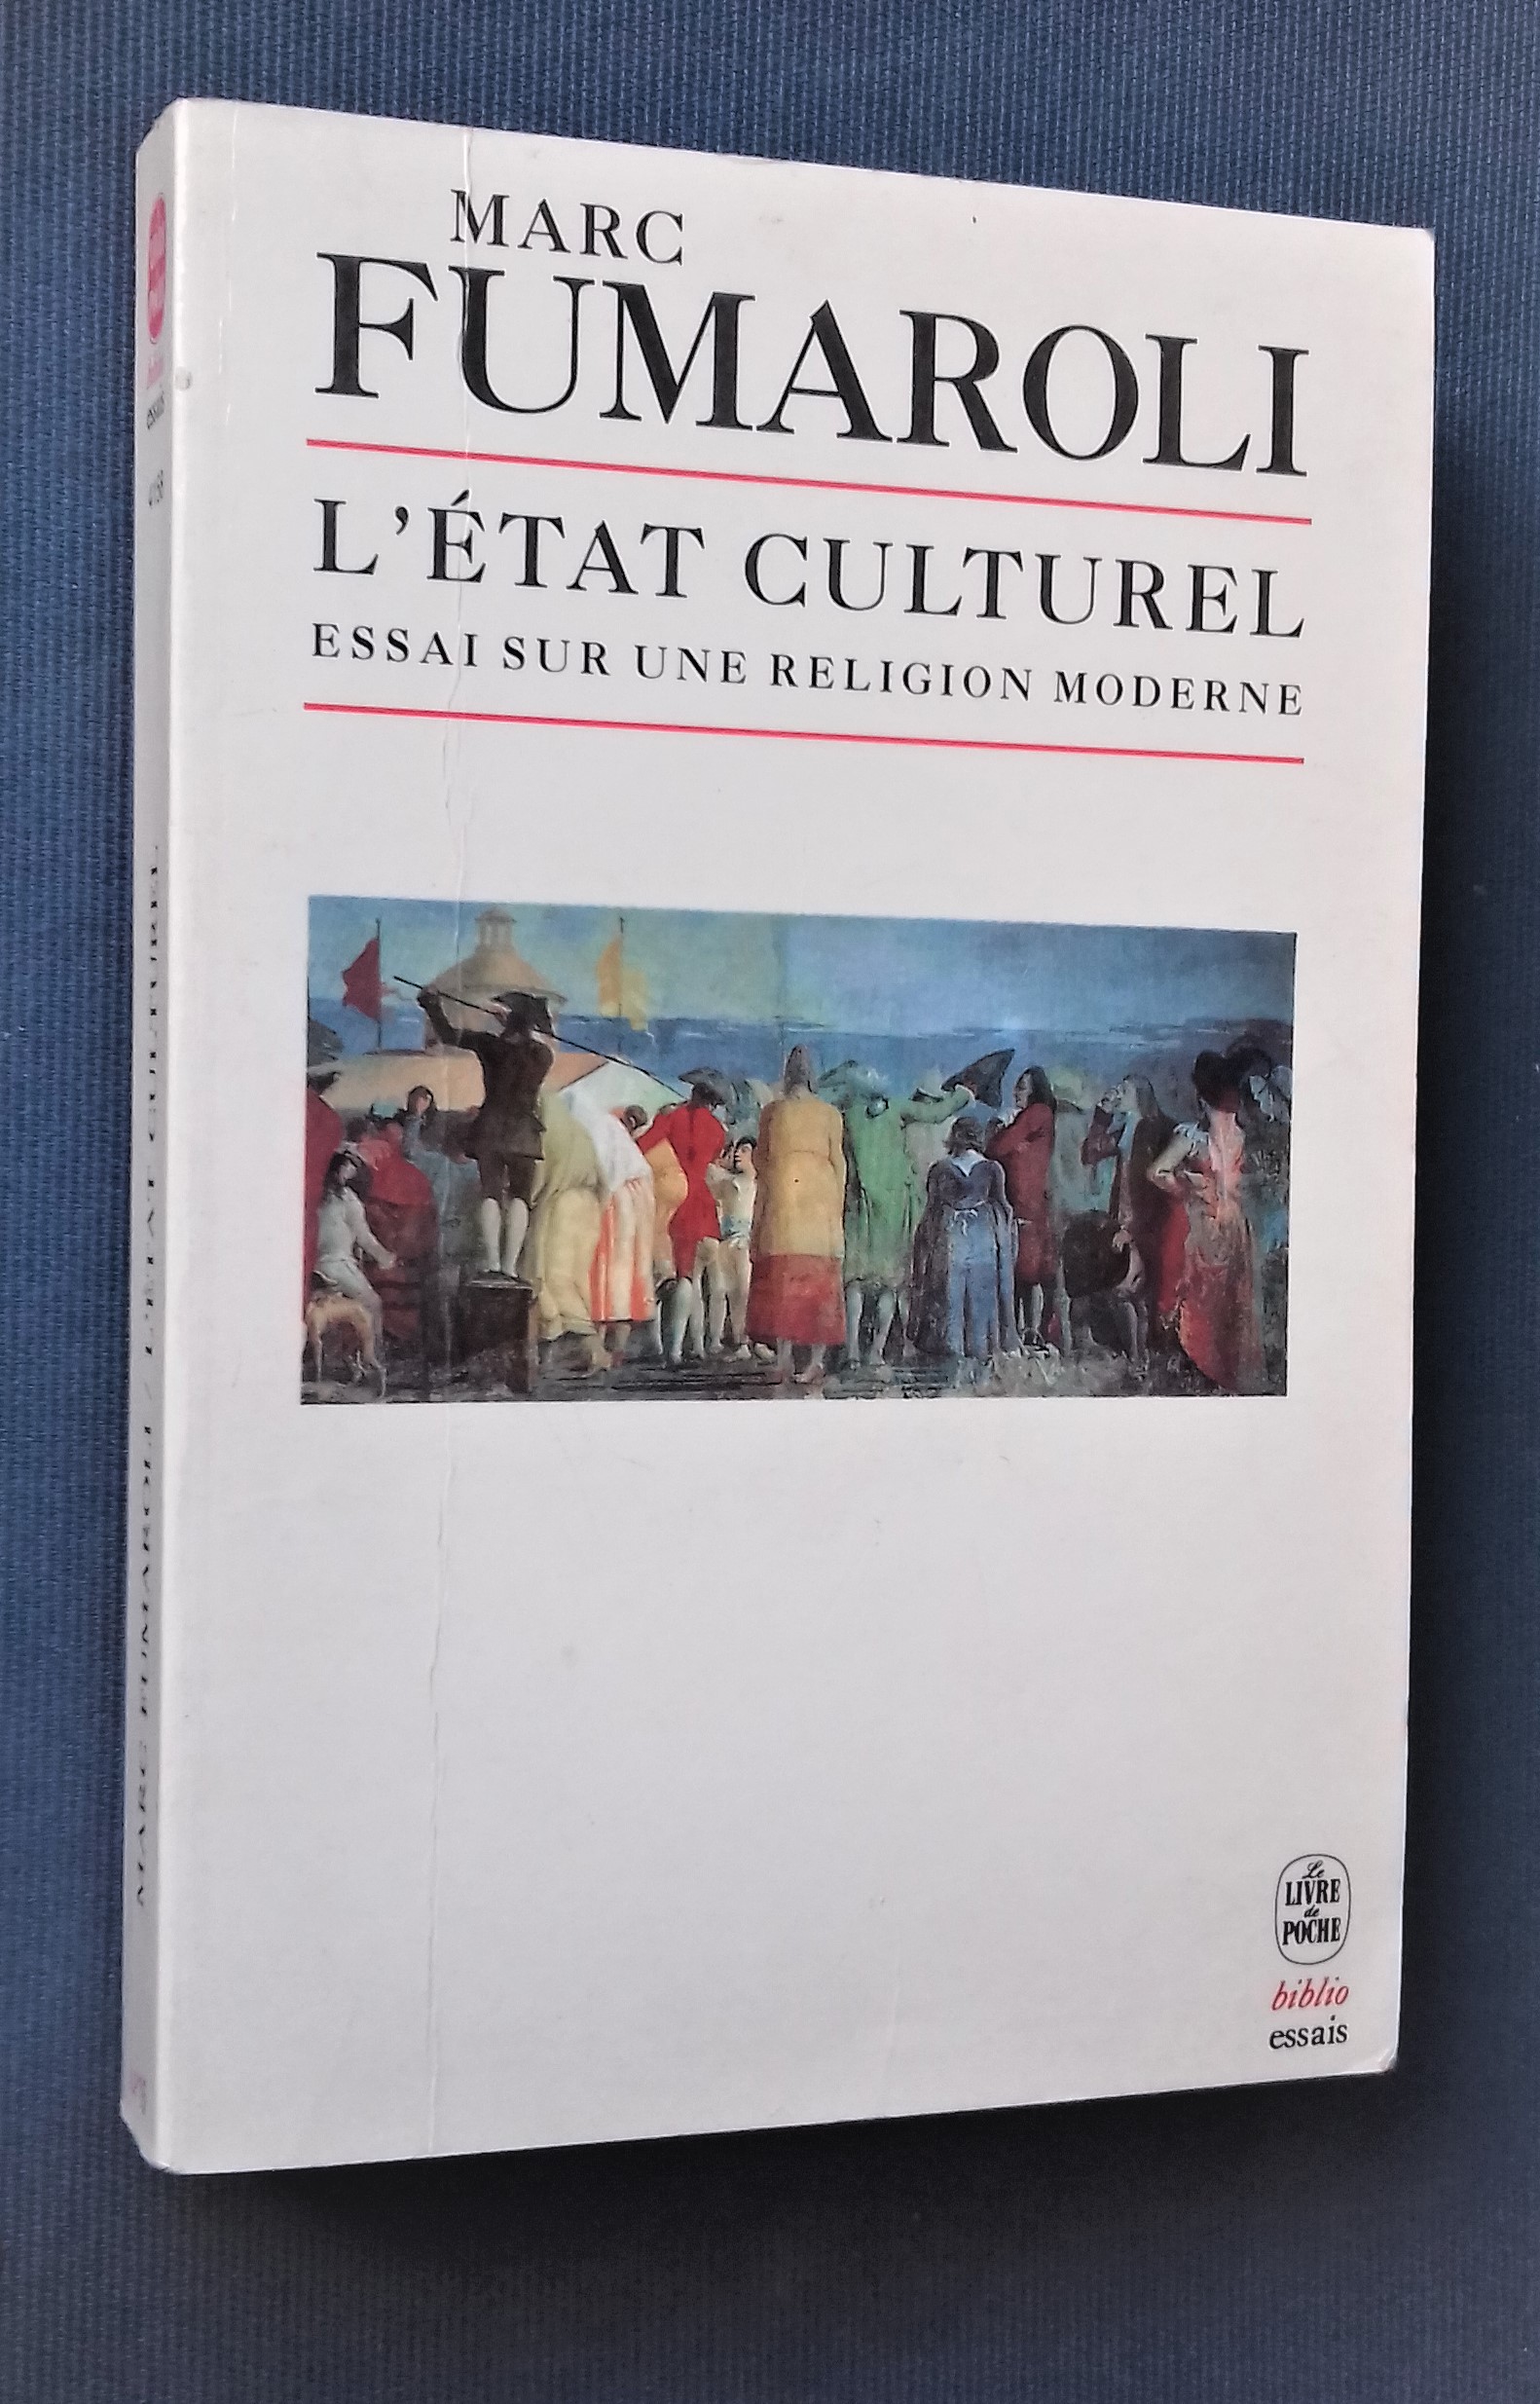 L'Etat culturel : une religion moderne. - FUMAROLI, Marc.